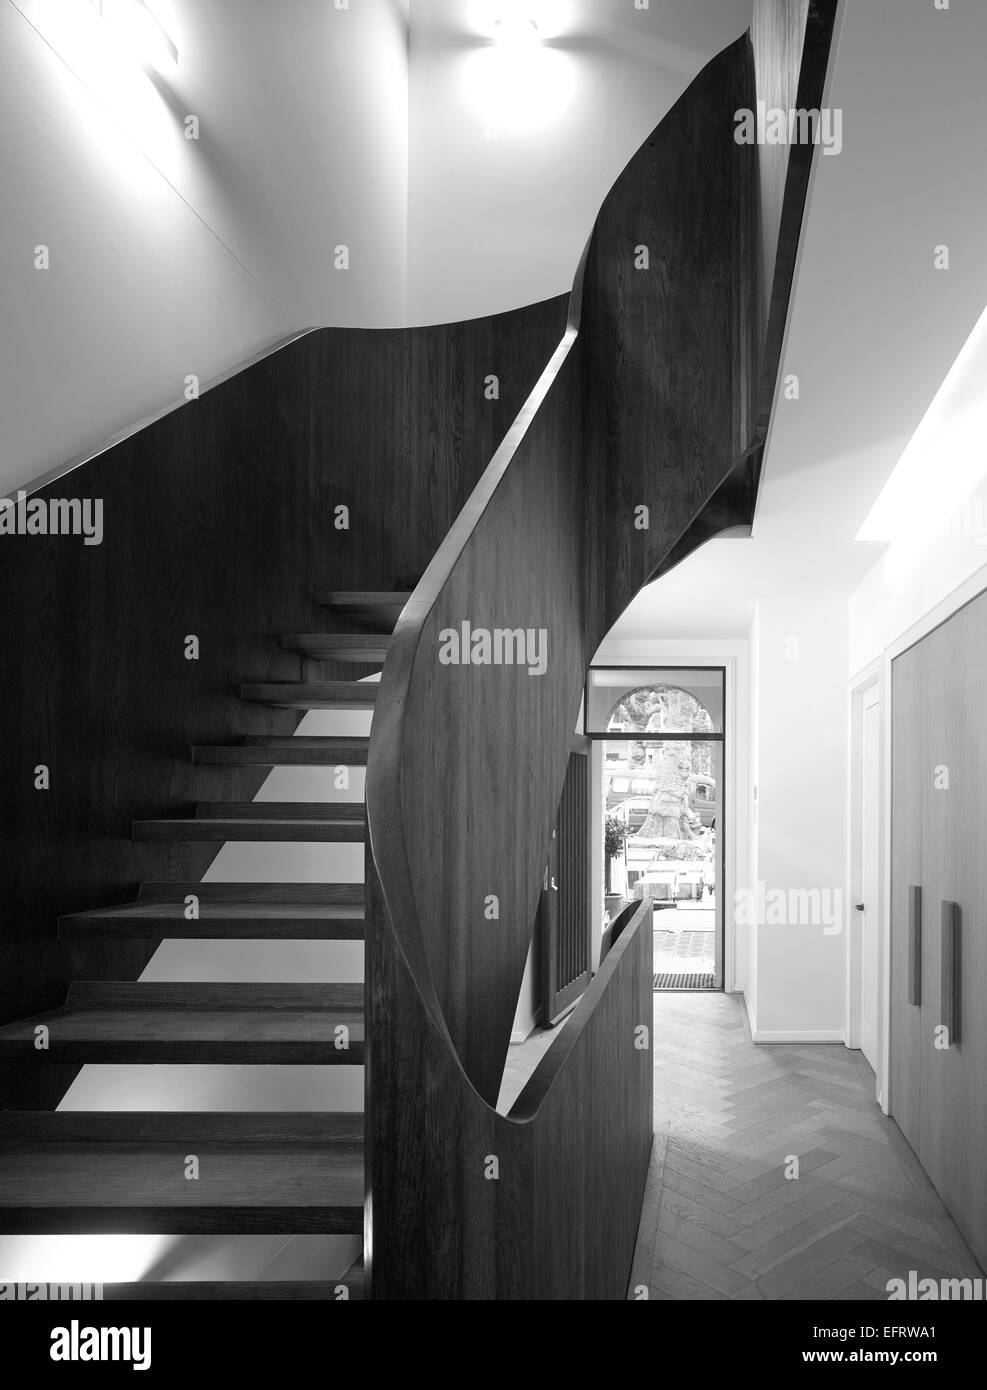 St Johns' Orchard, London, UK. Architect: John Smart Architects, 2013. Staircase. Stock Photo